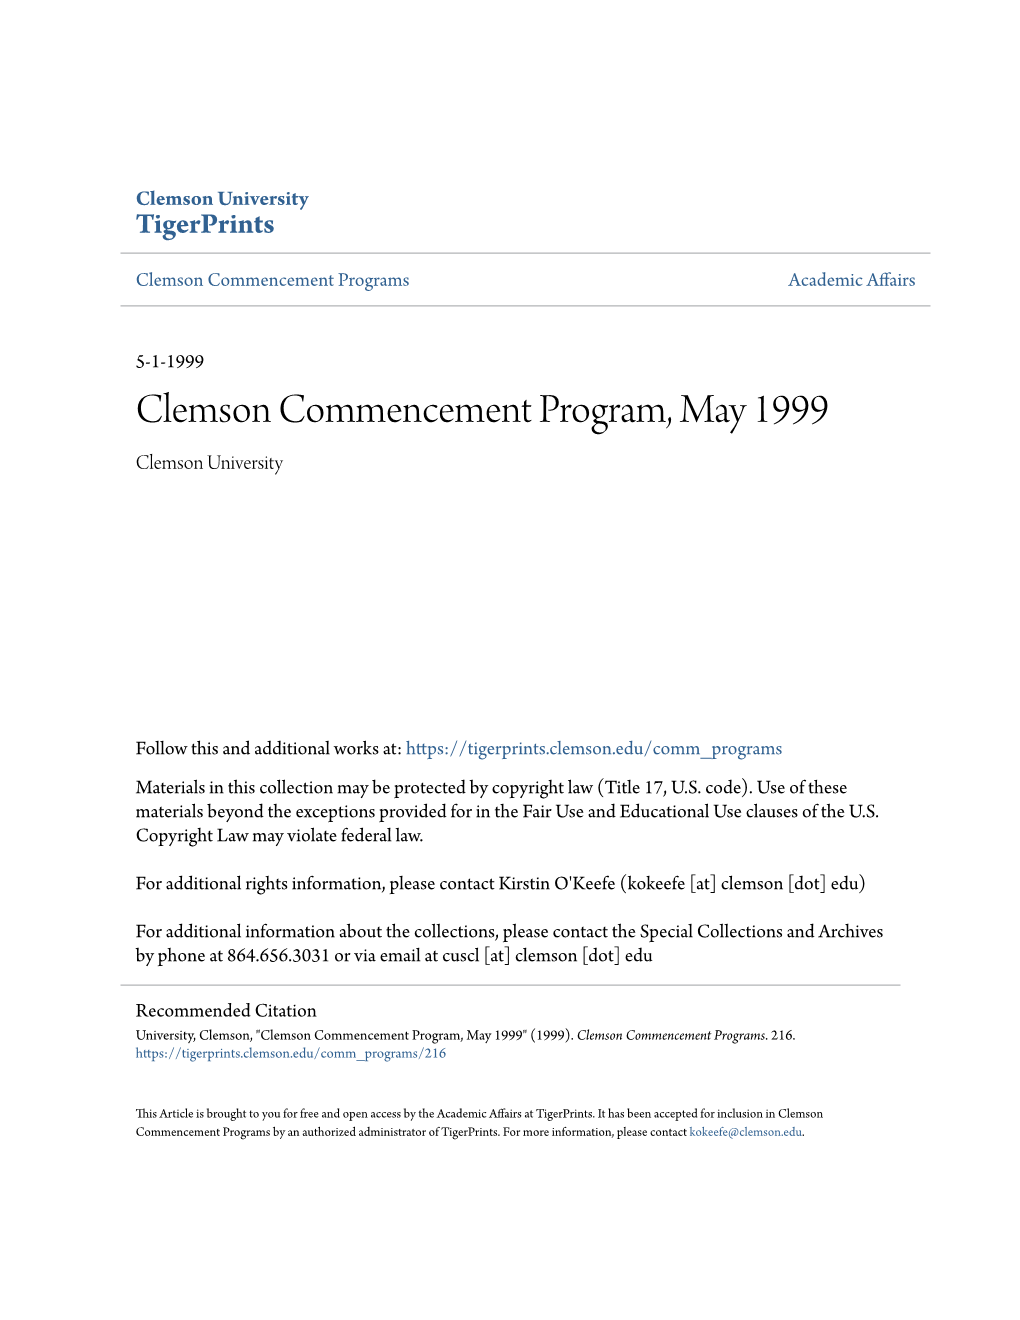 Clemson Commencement Program, May 1999 Clemson University